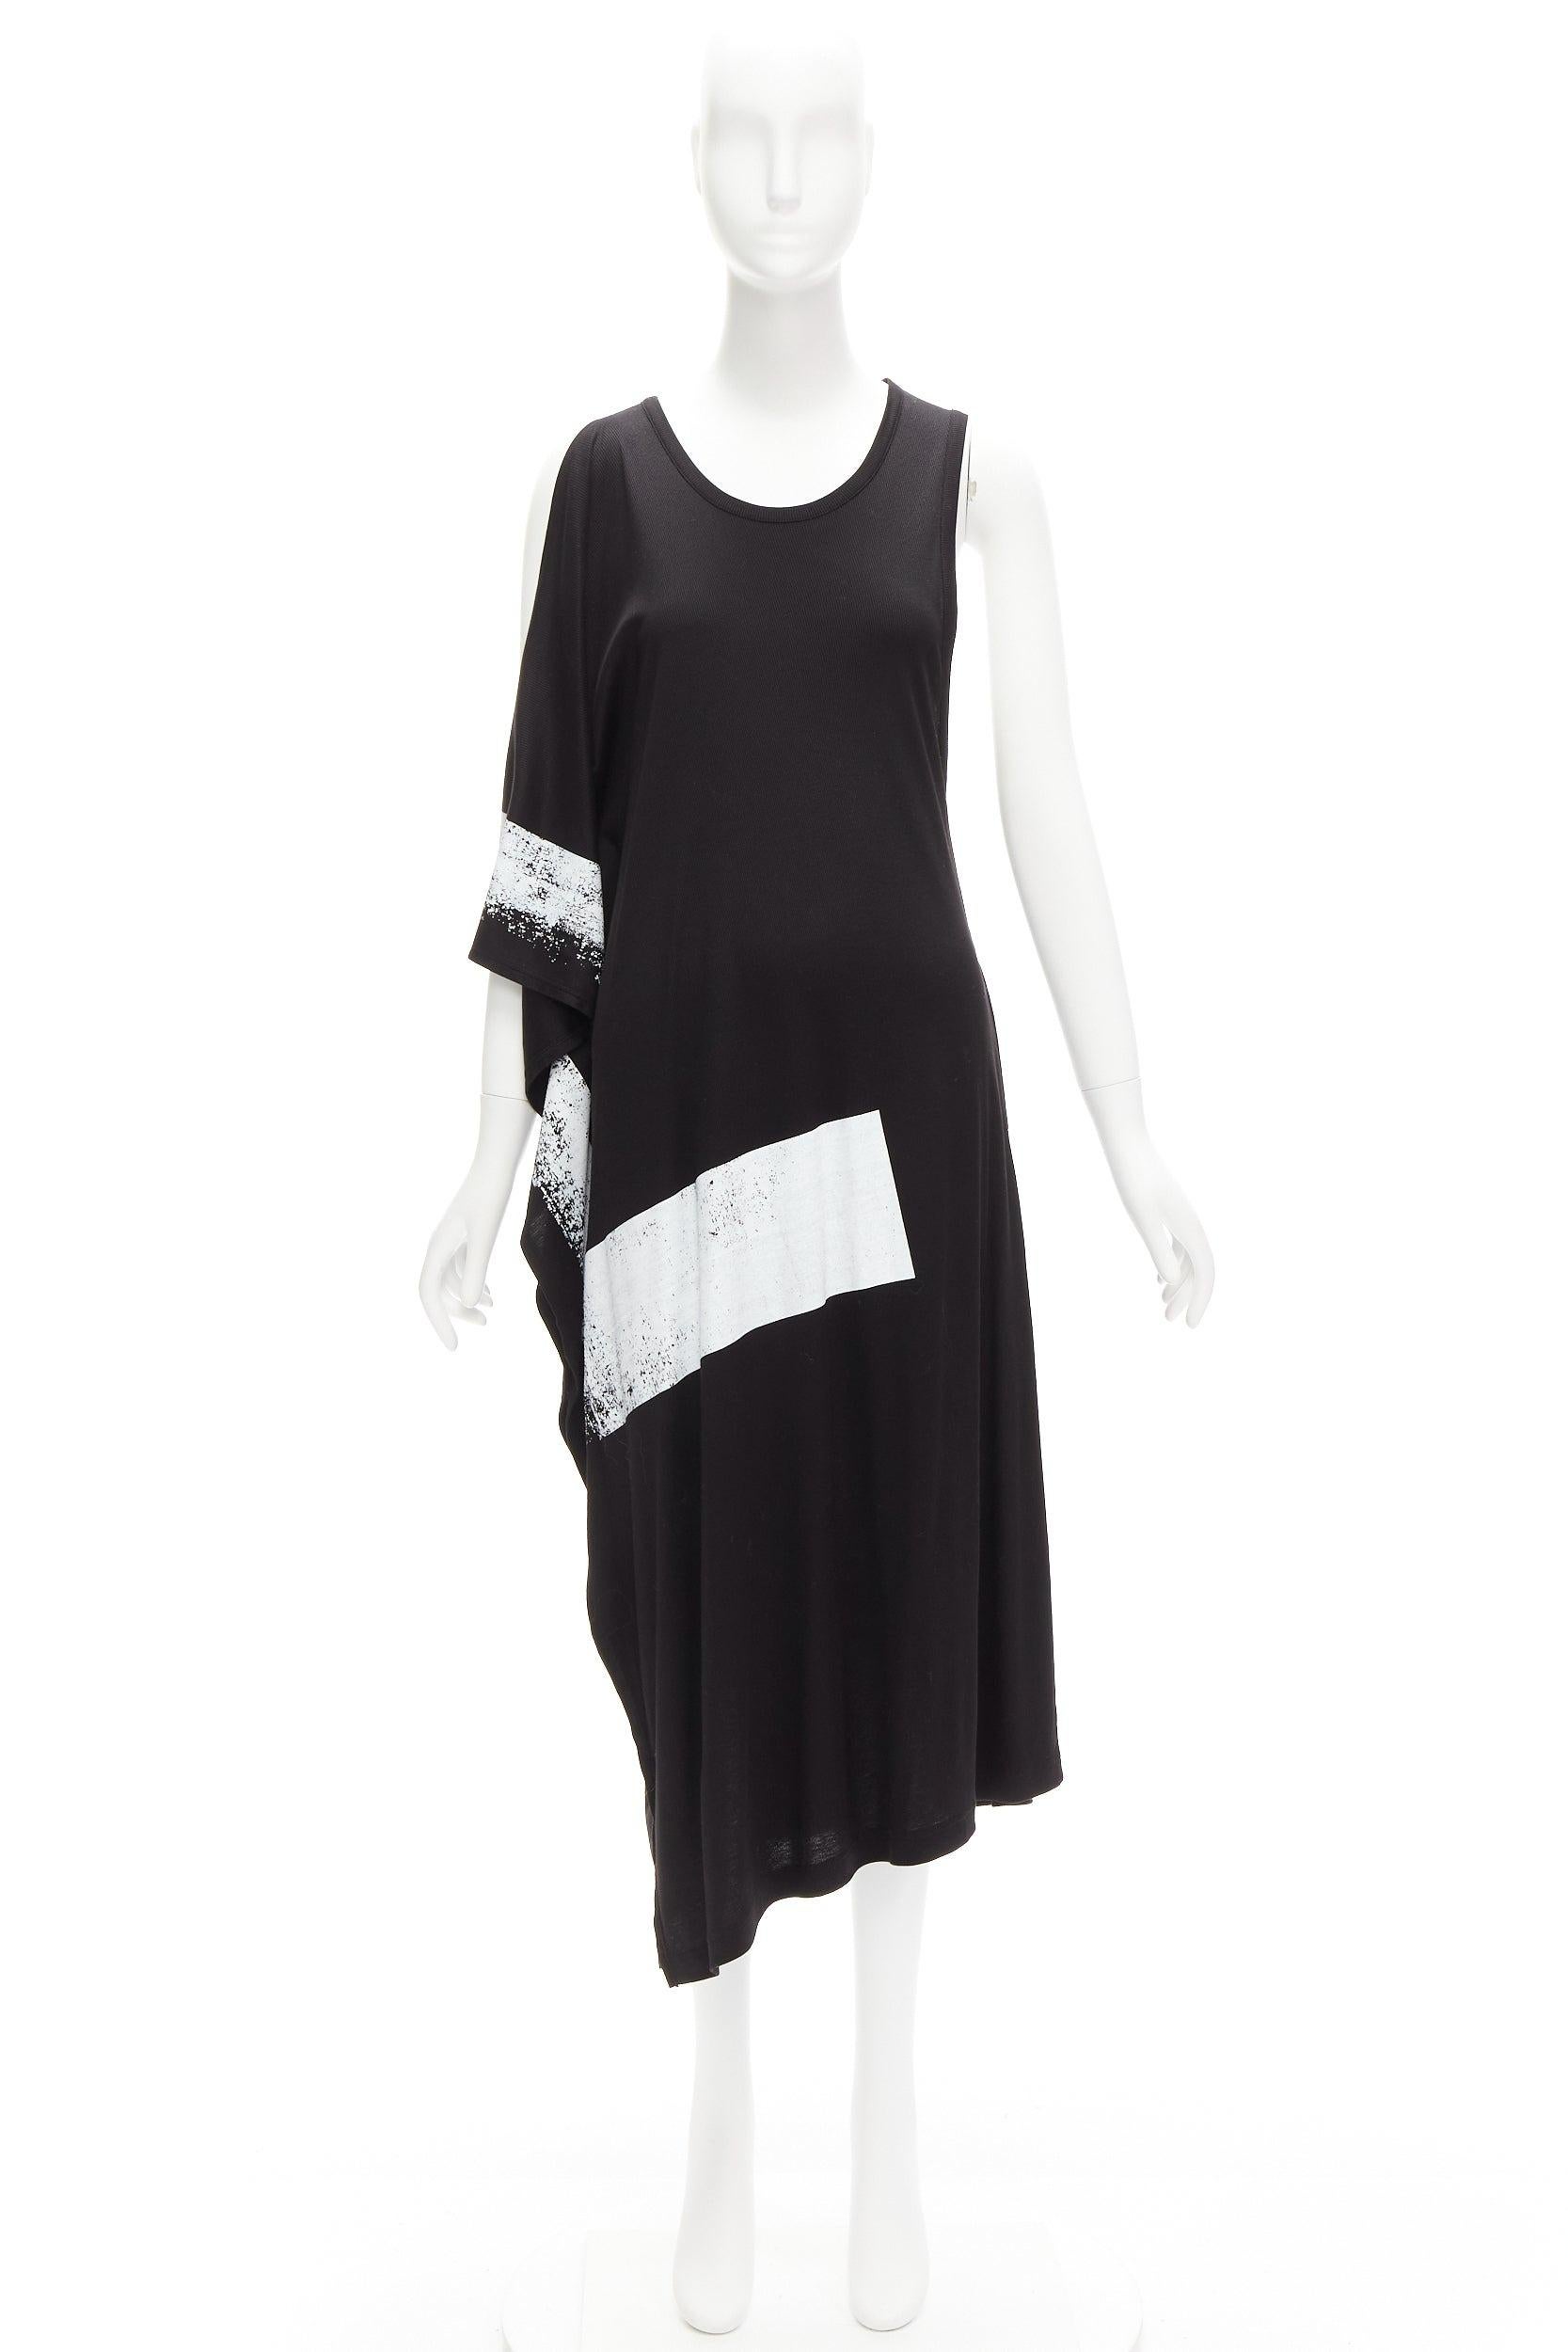 LIMI FEU black LF printed asymmetric sleeveless scoop neck tank dress S For Sale 4